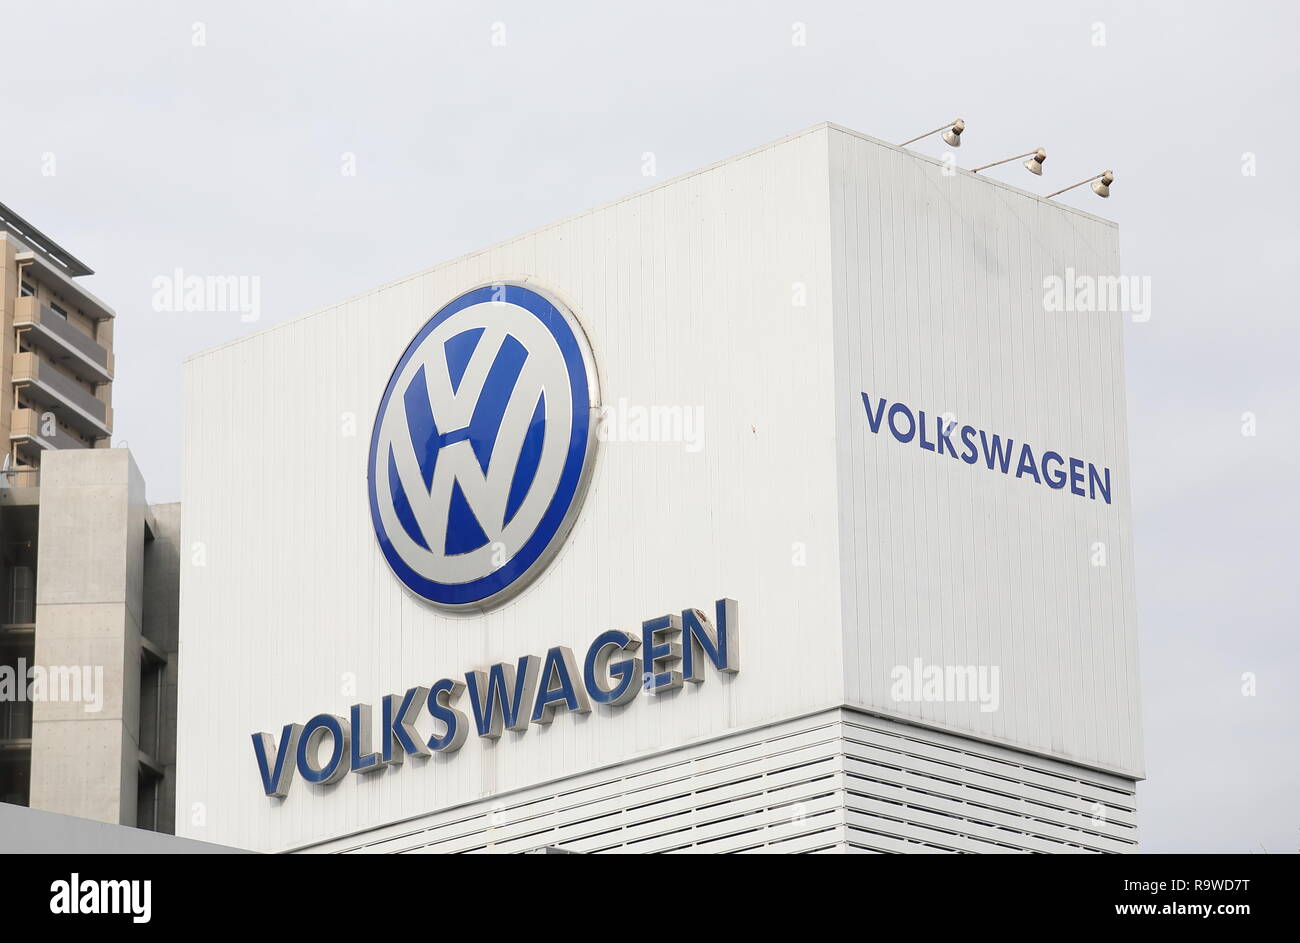 Volkswagen car company. Stock Photo